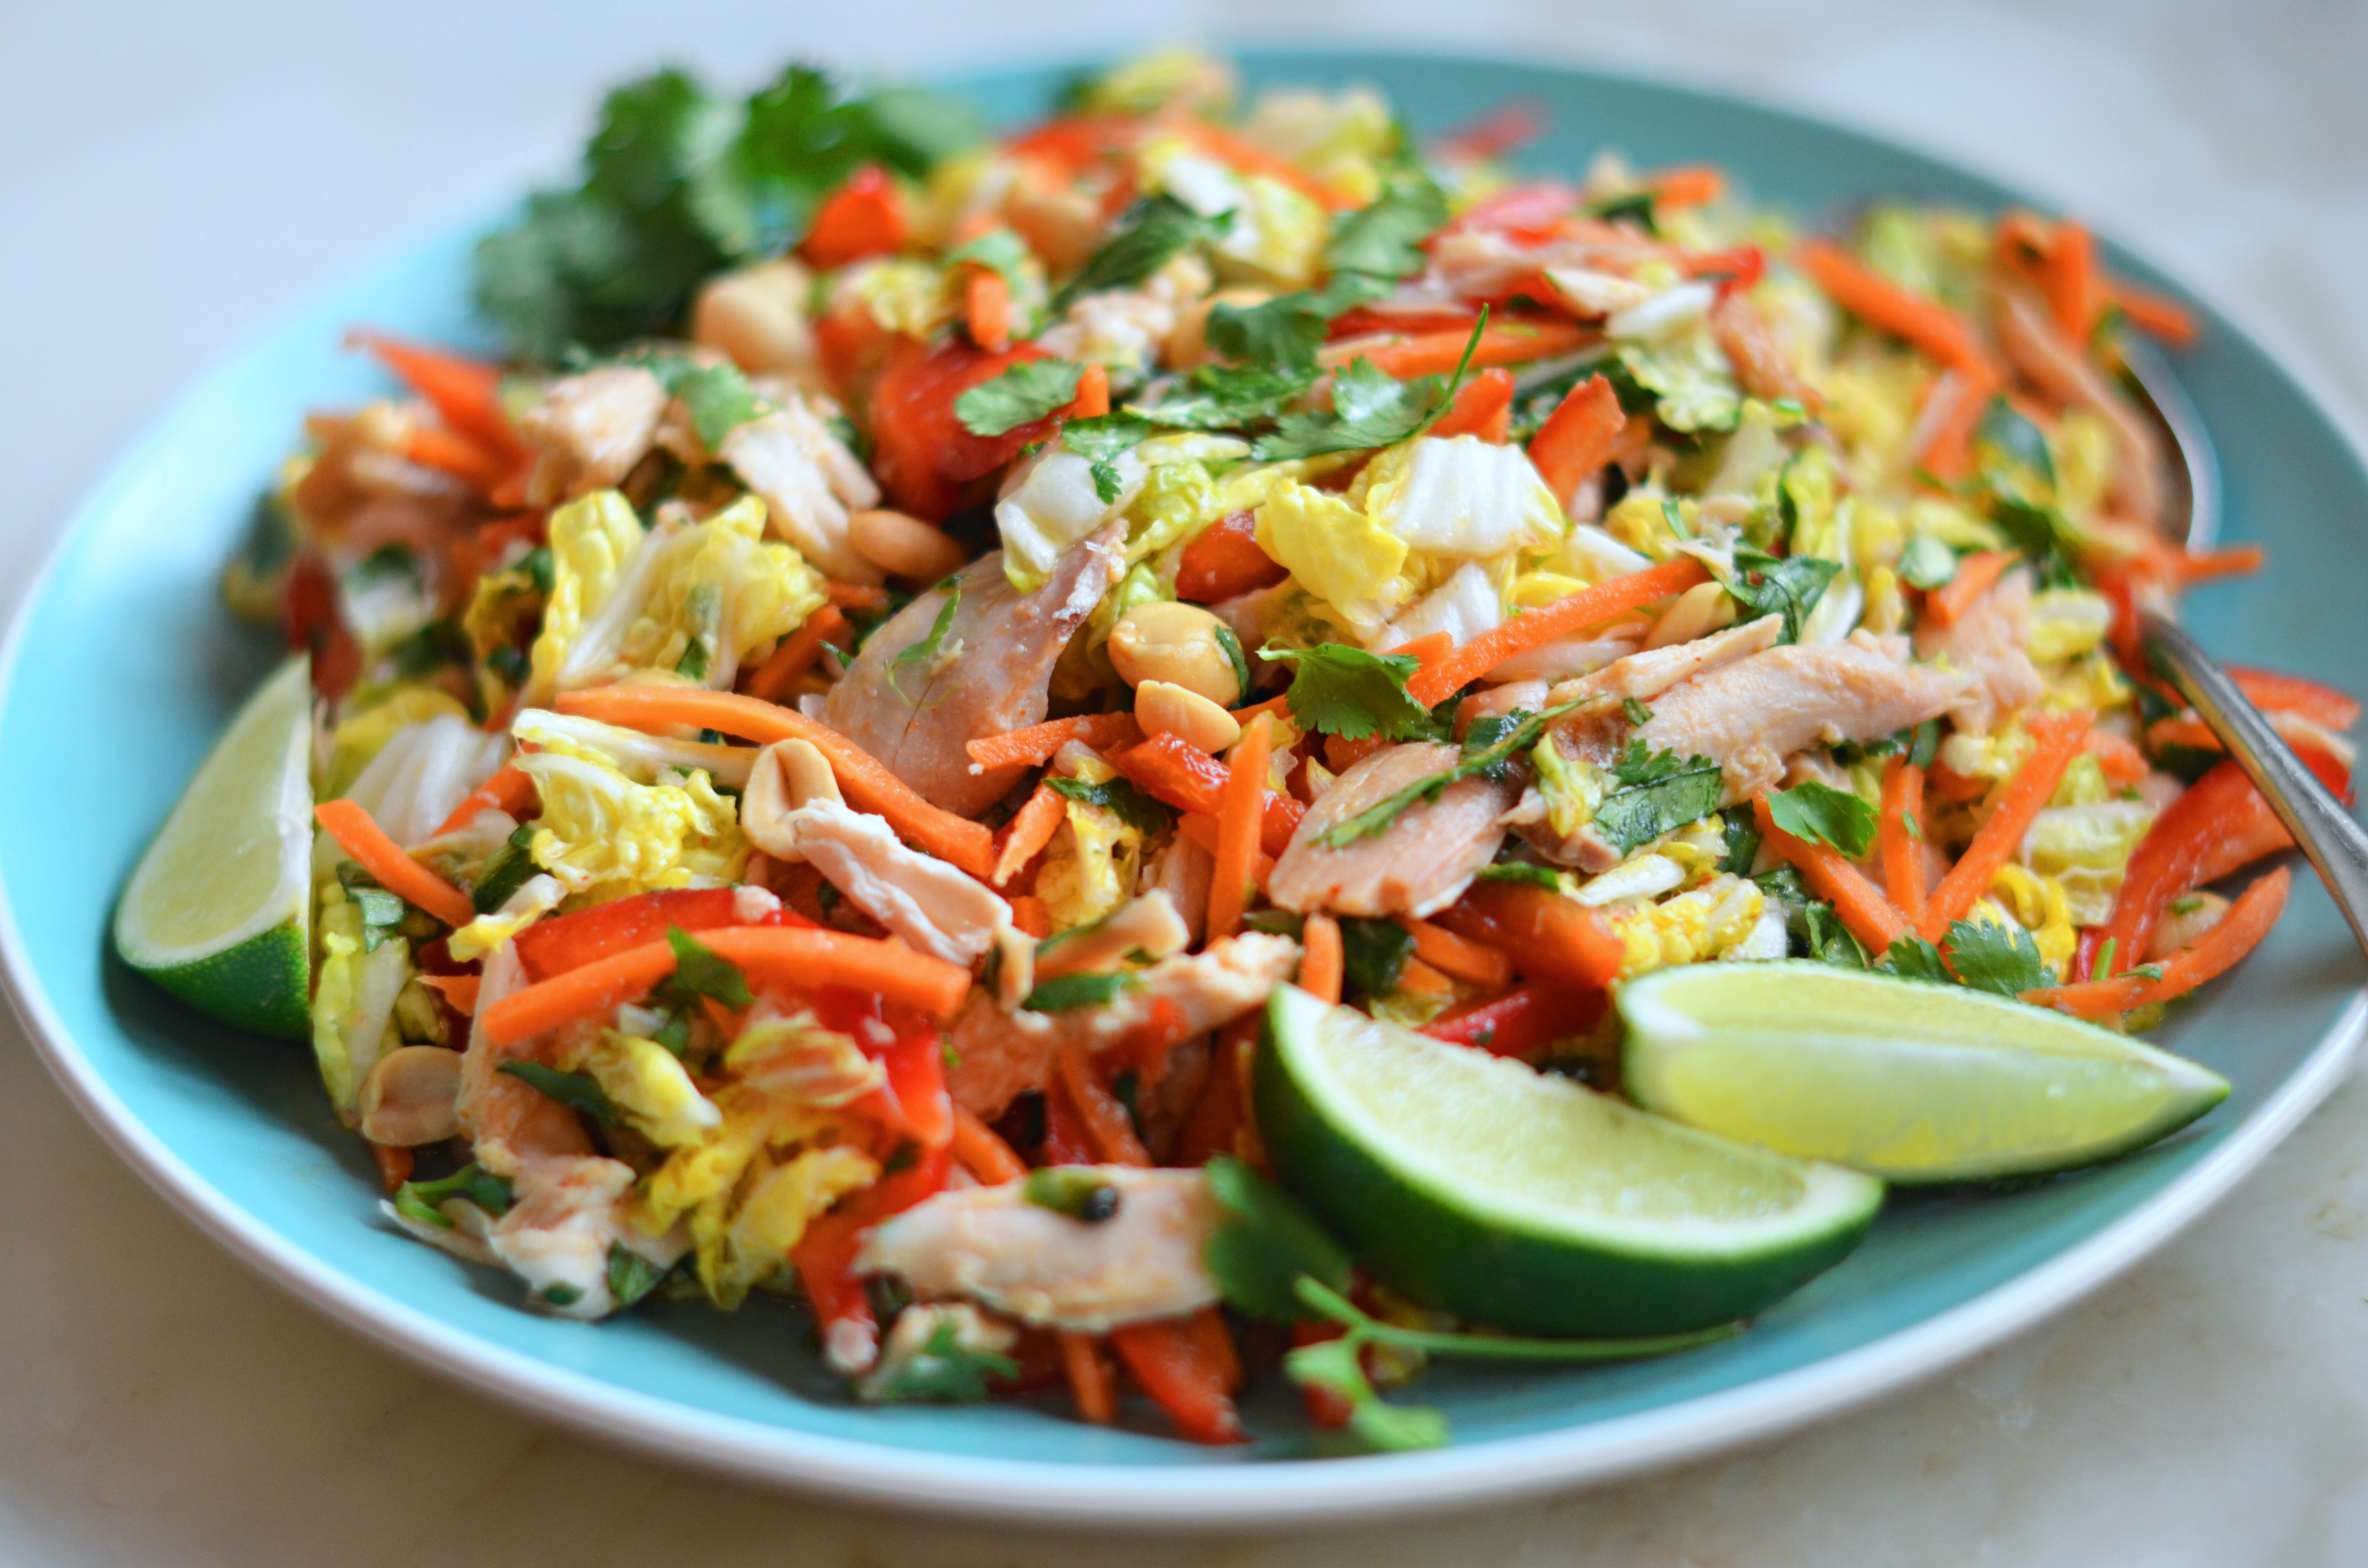 https://www.onceuponachef.com/images/2015/04/Shredded-Vietnamese-Chicken-Salad.jpg